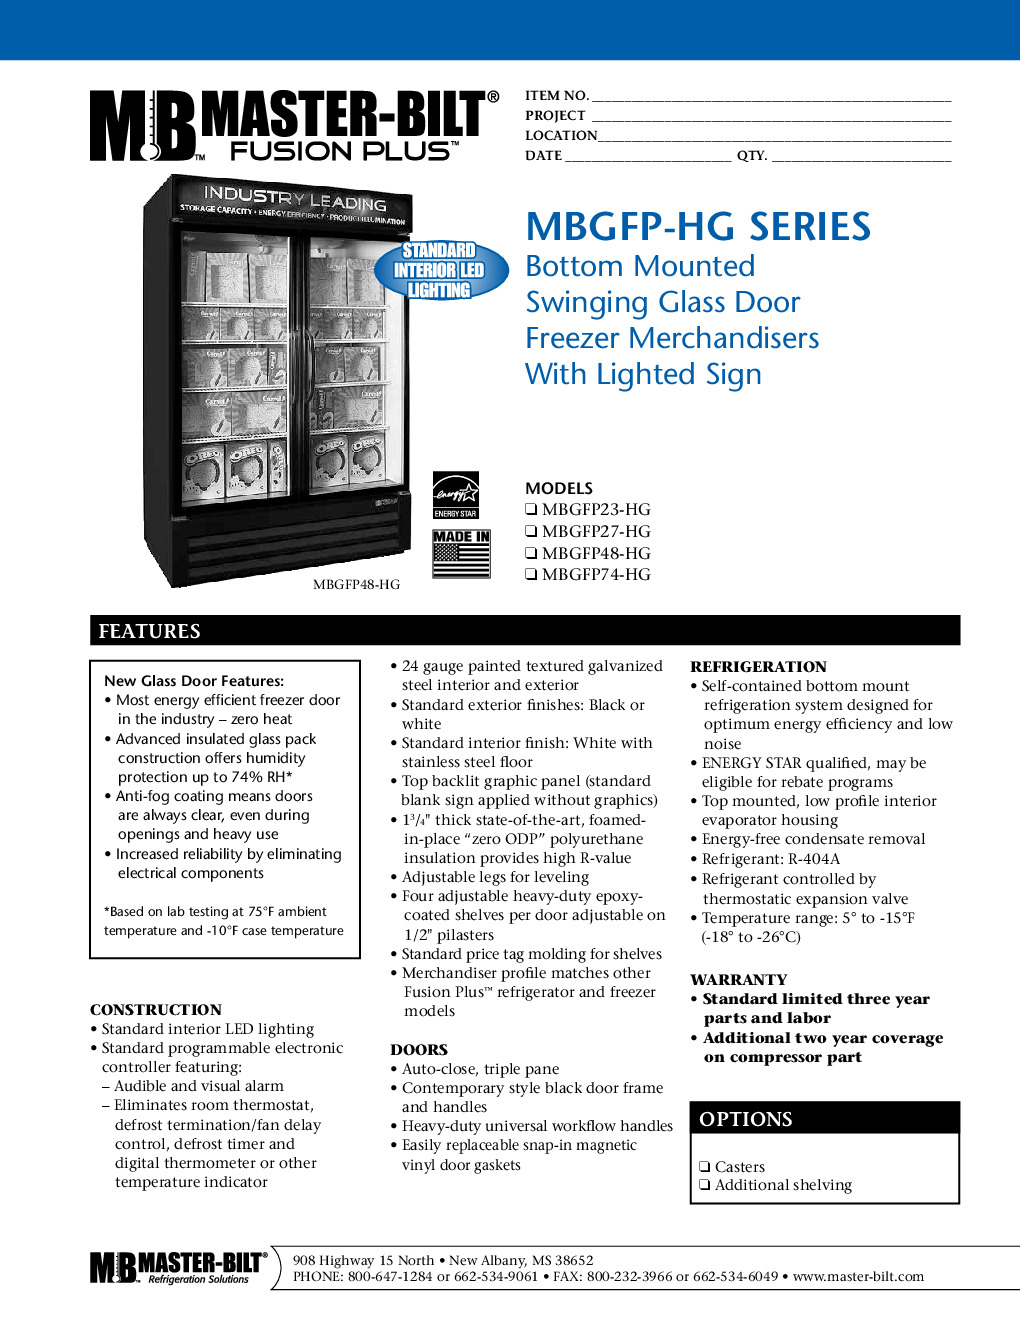 Master-Bilt MBGFP27-HG Merchandiser Freezer